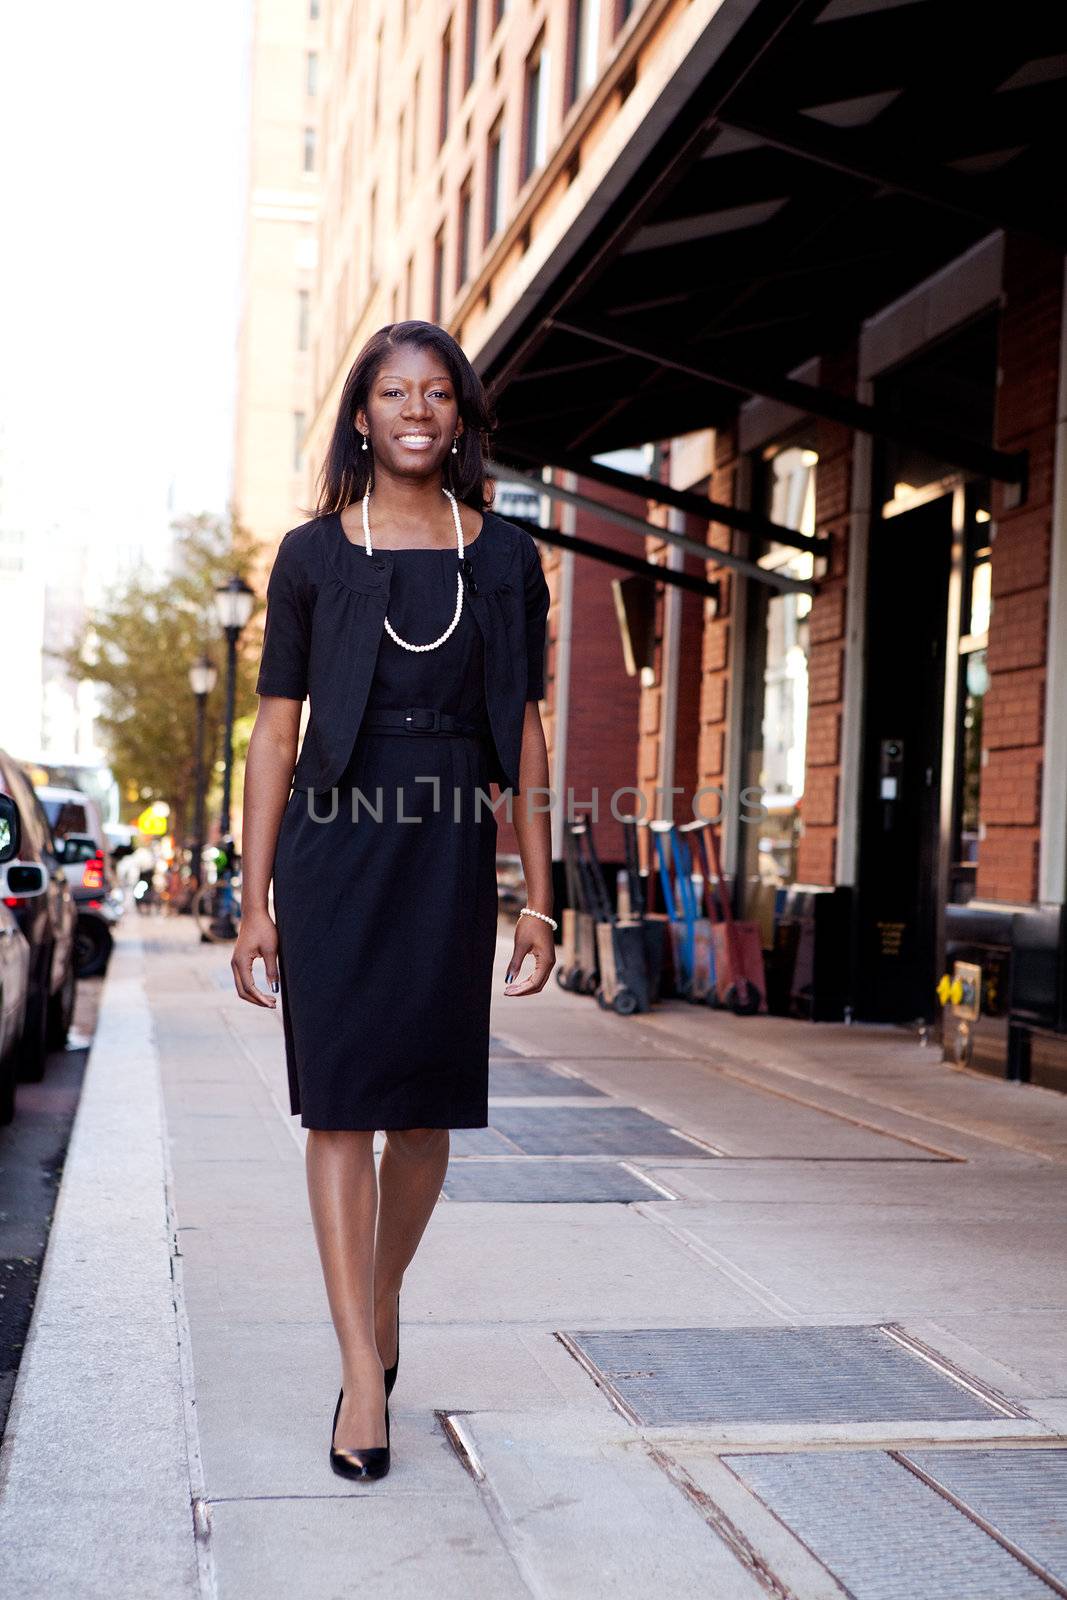 An African American business woman in an urban setting.